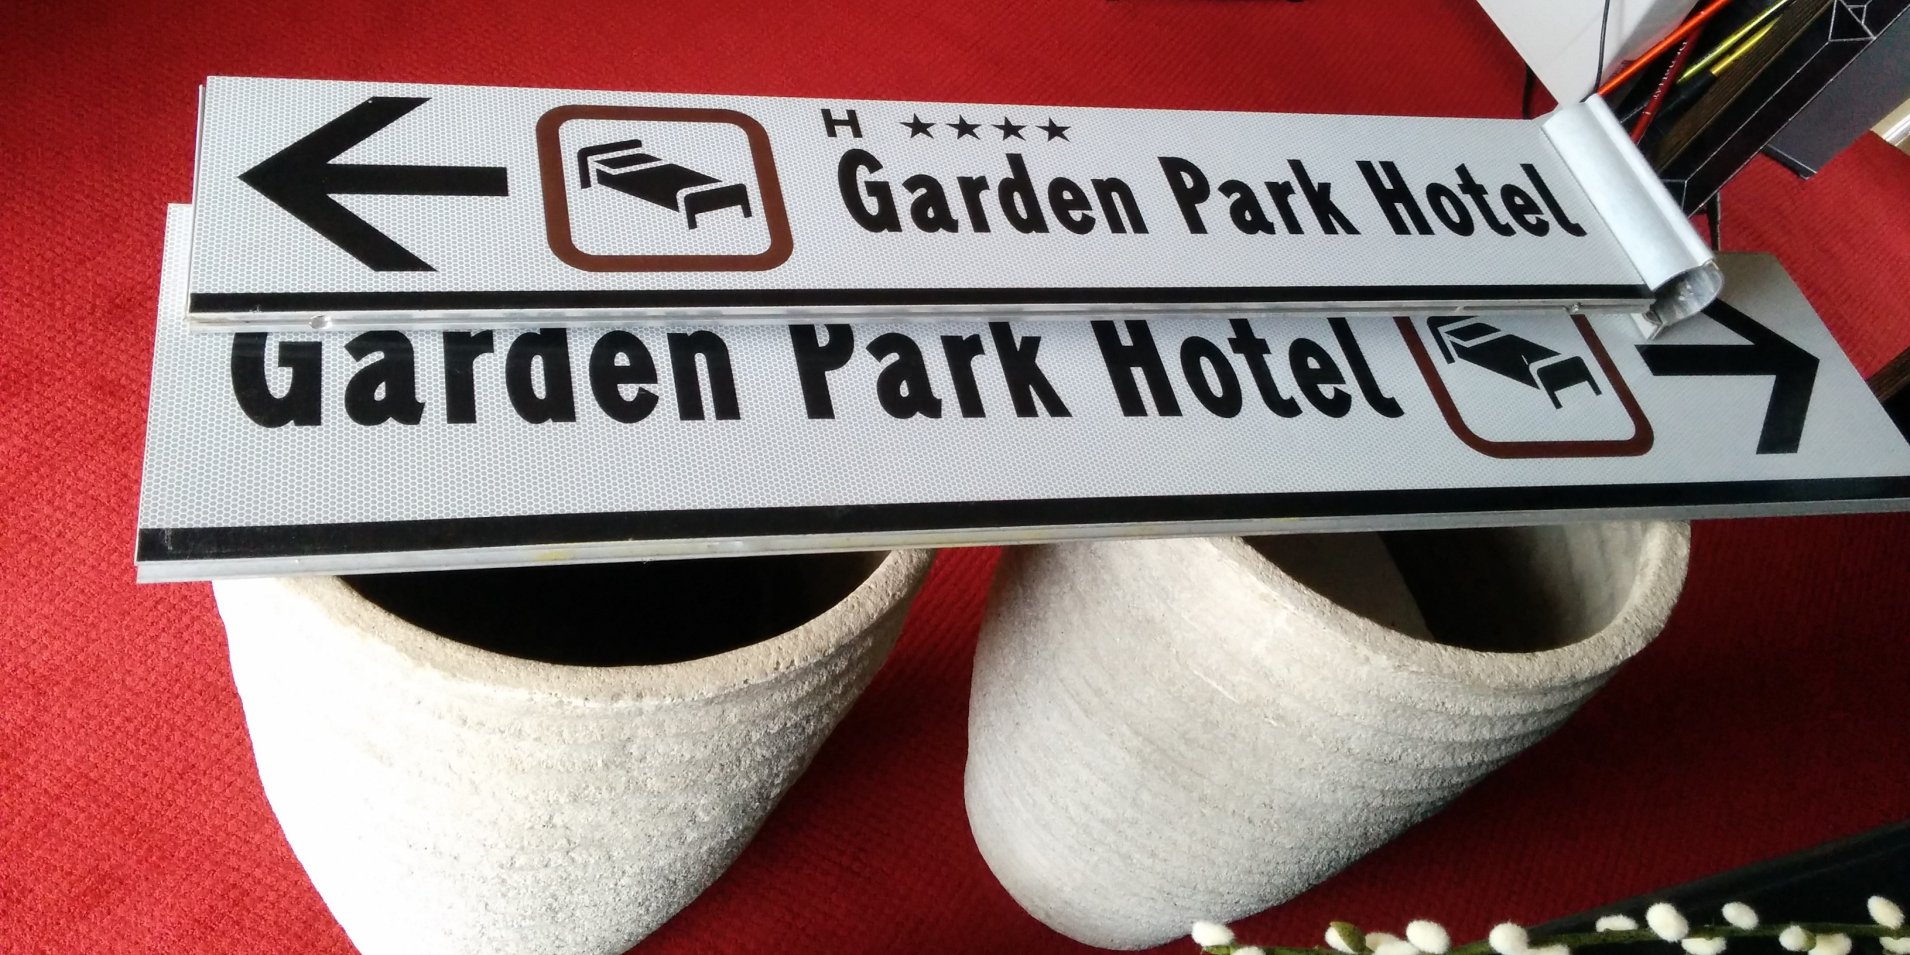 Garden Park Hotel building lot